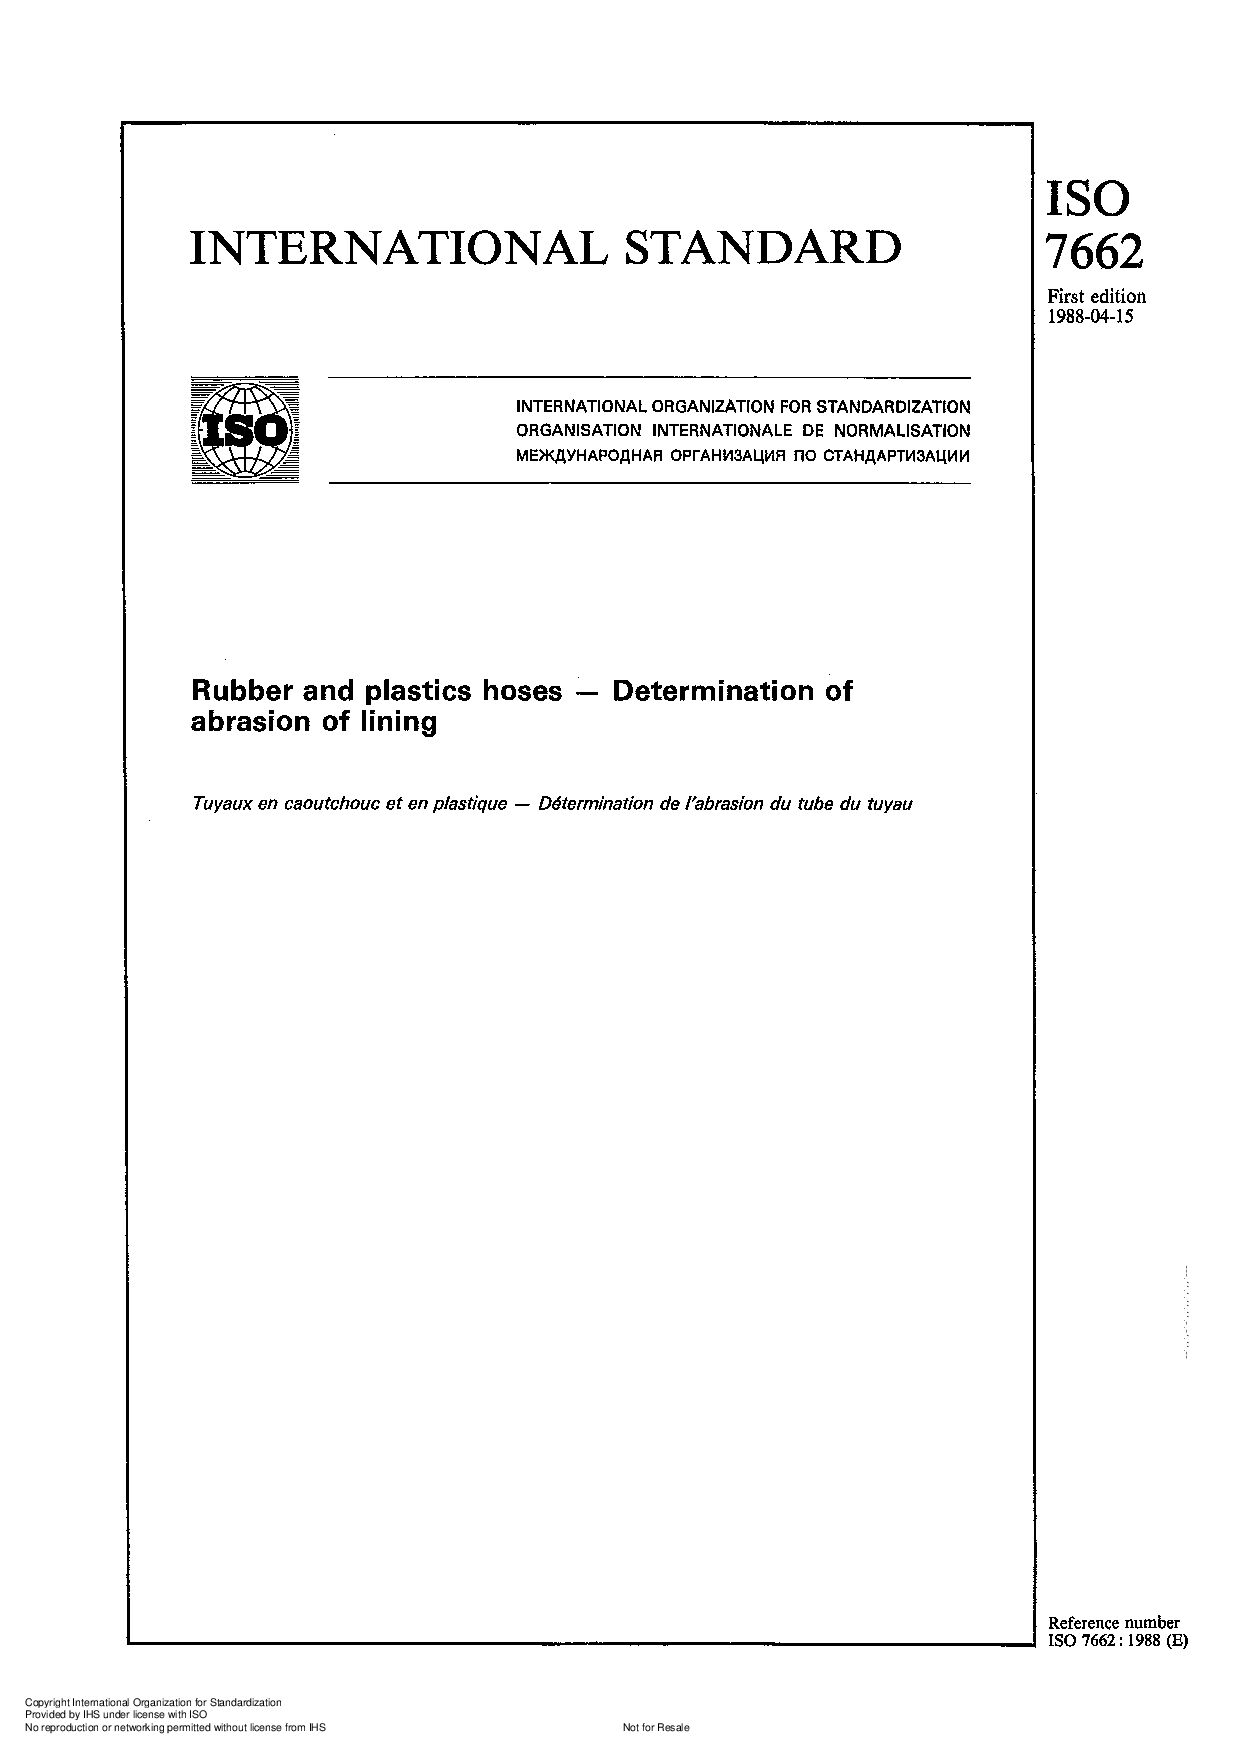 ISO 7662:1988封面图